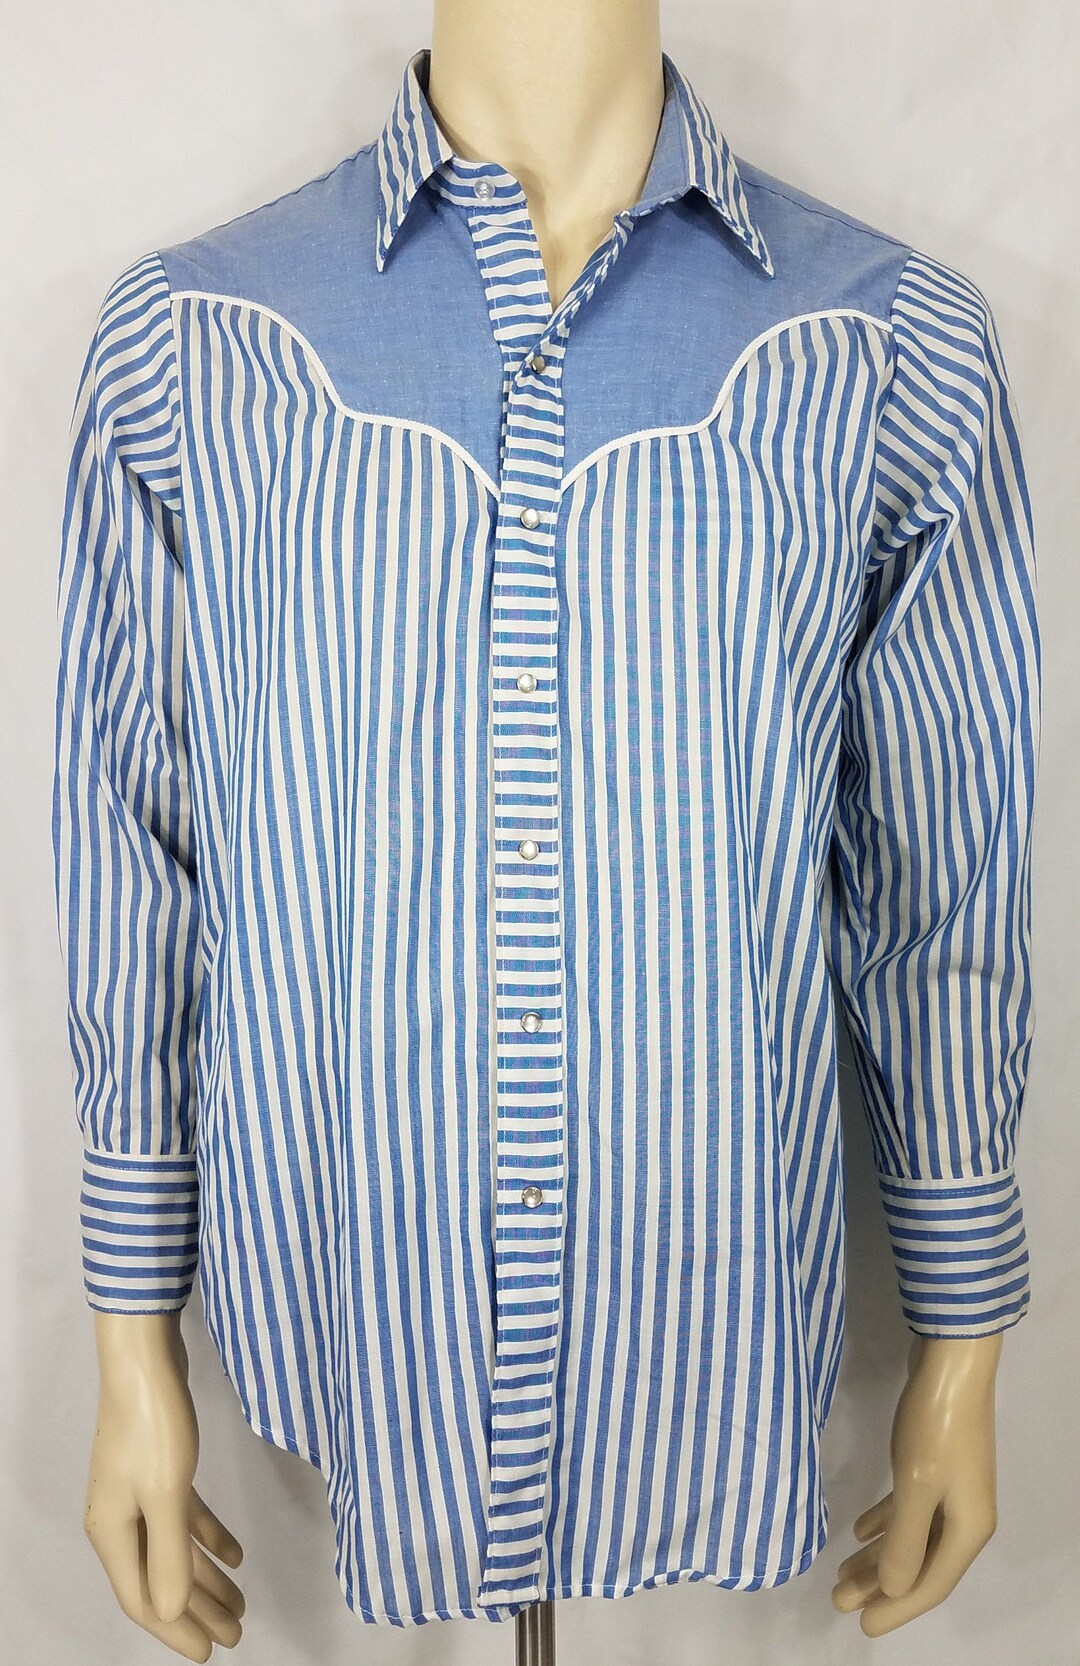 Blue Ranchwear Men's Striped Long Sleeve Pearl Snap Shirt Sand X-Large